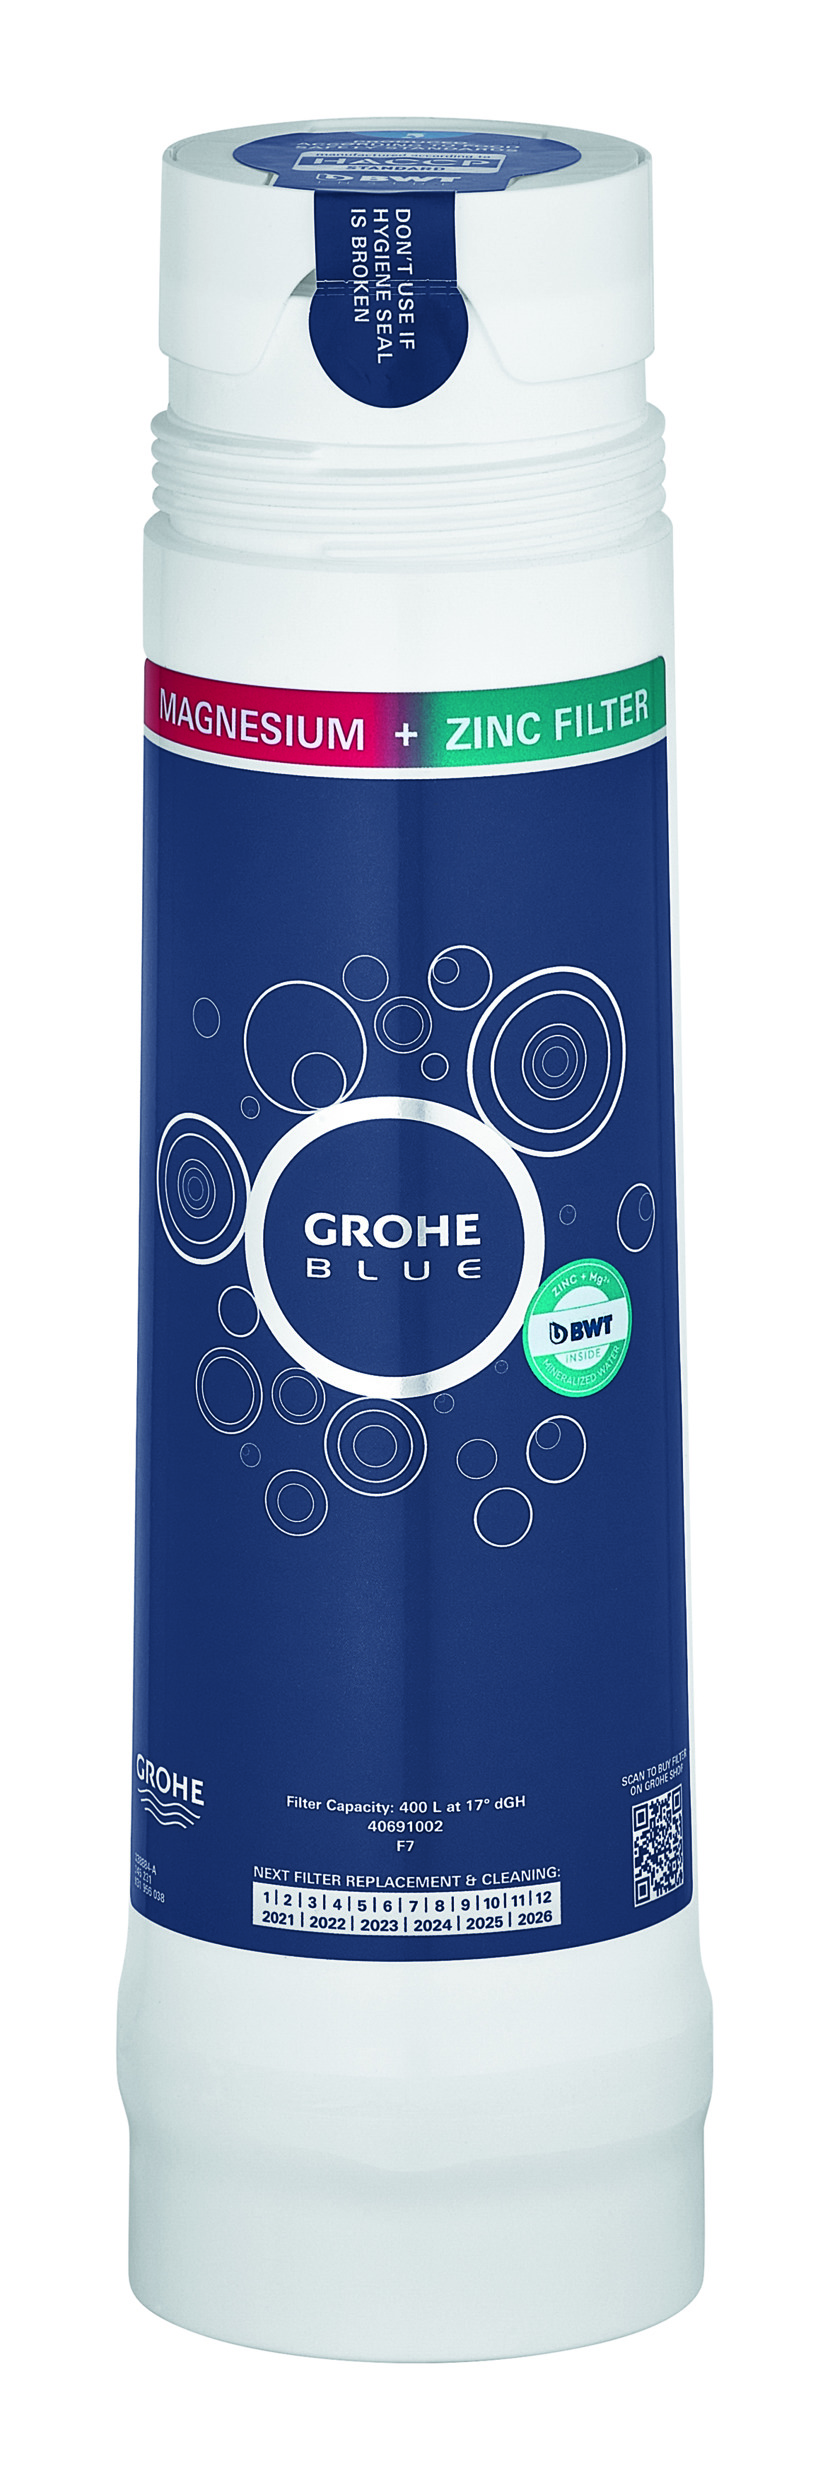 GROHE Blue® Magnesium + Zinc Filter